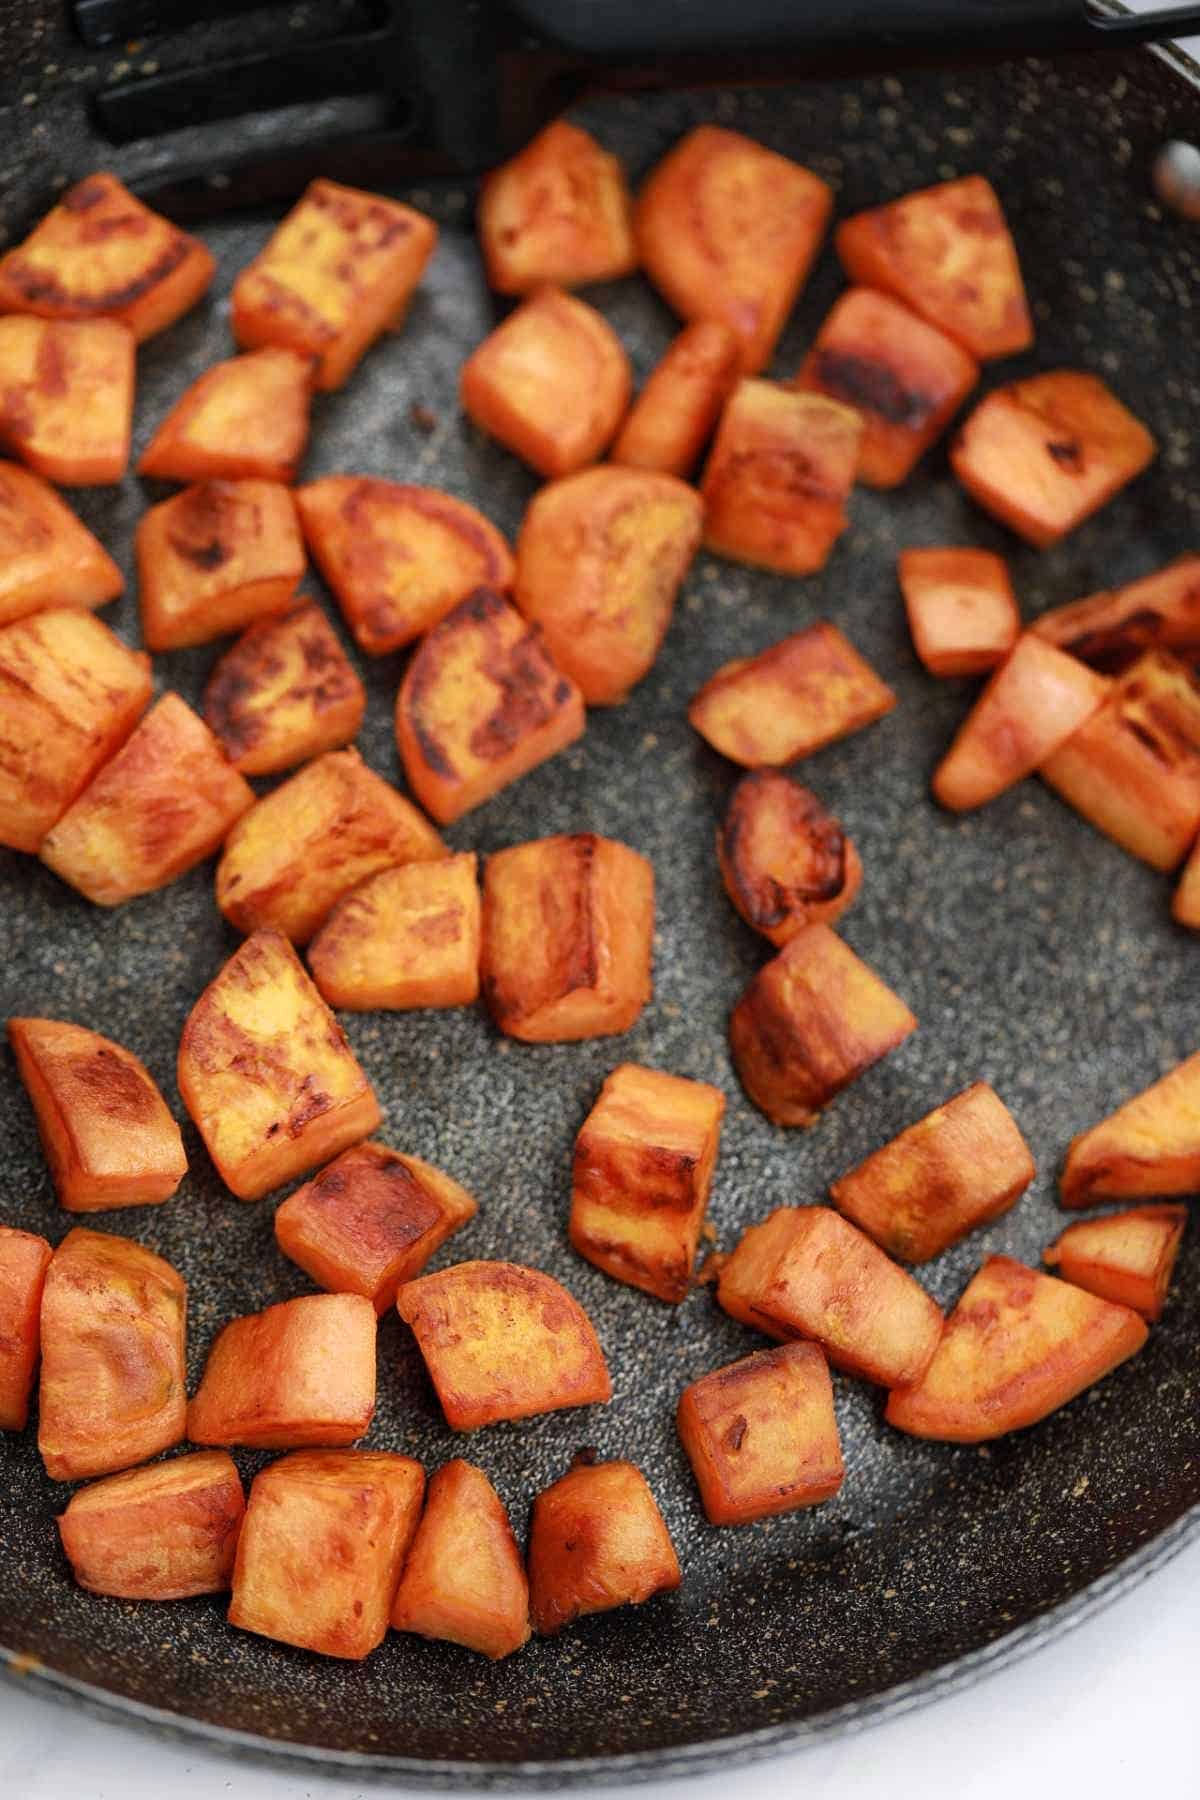 fried sweet potatoes in a frying pan.